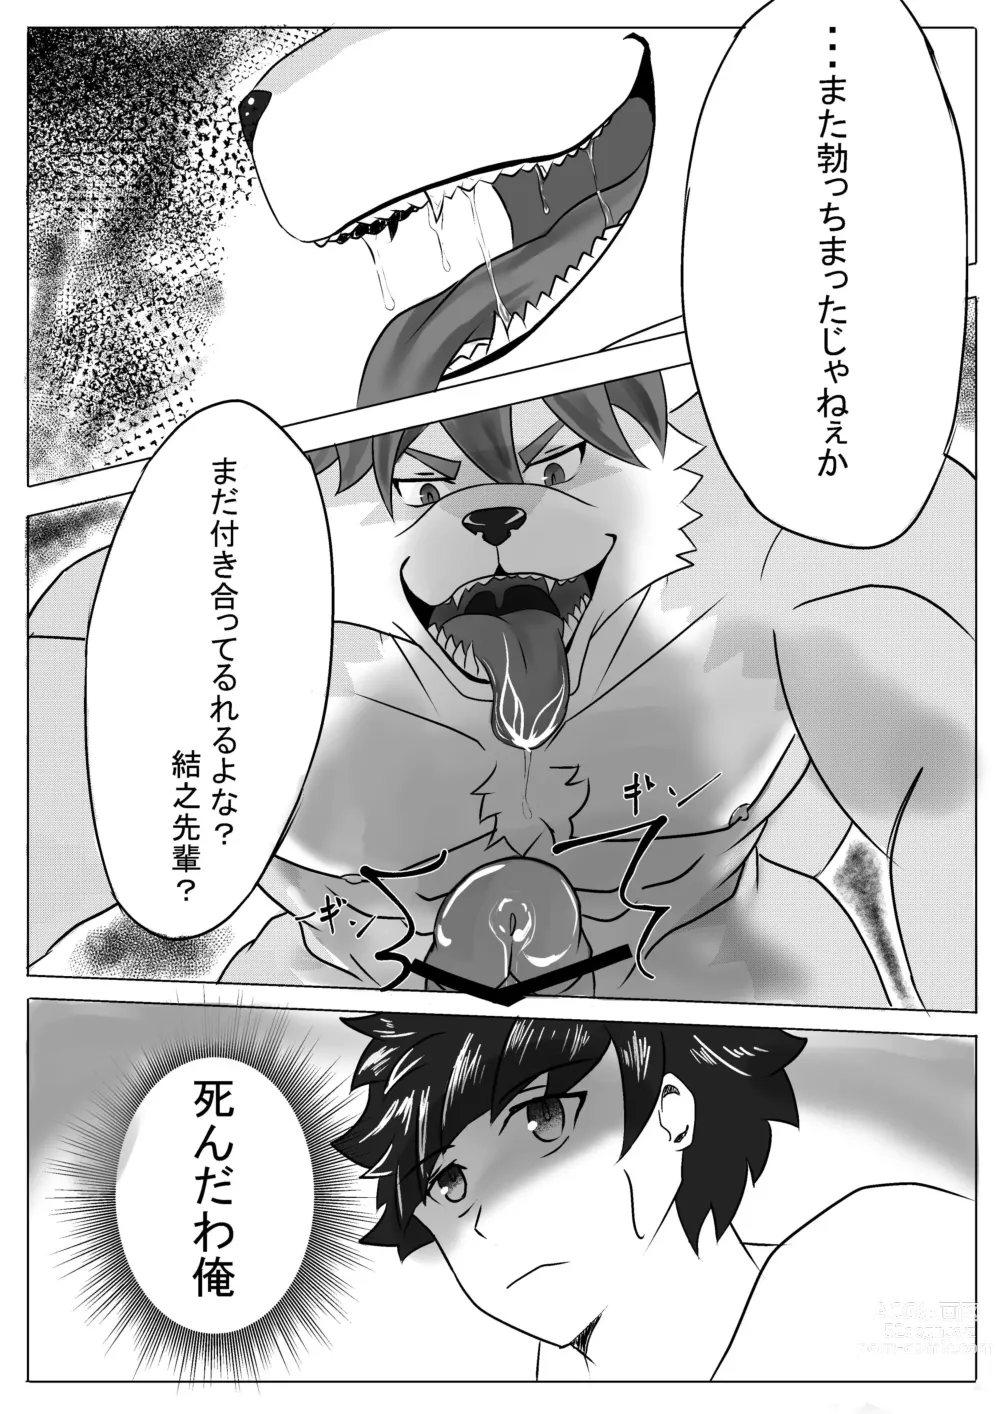 Page 19 of doujinshi Yoru no Ookami